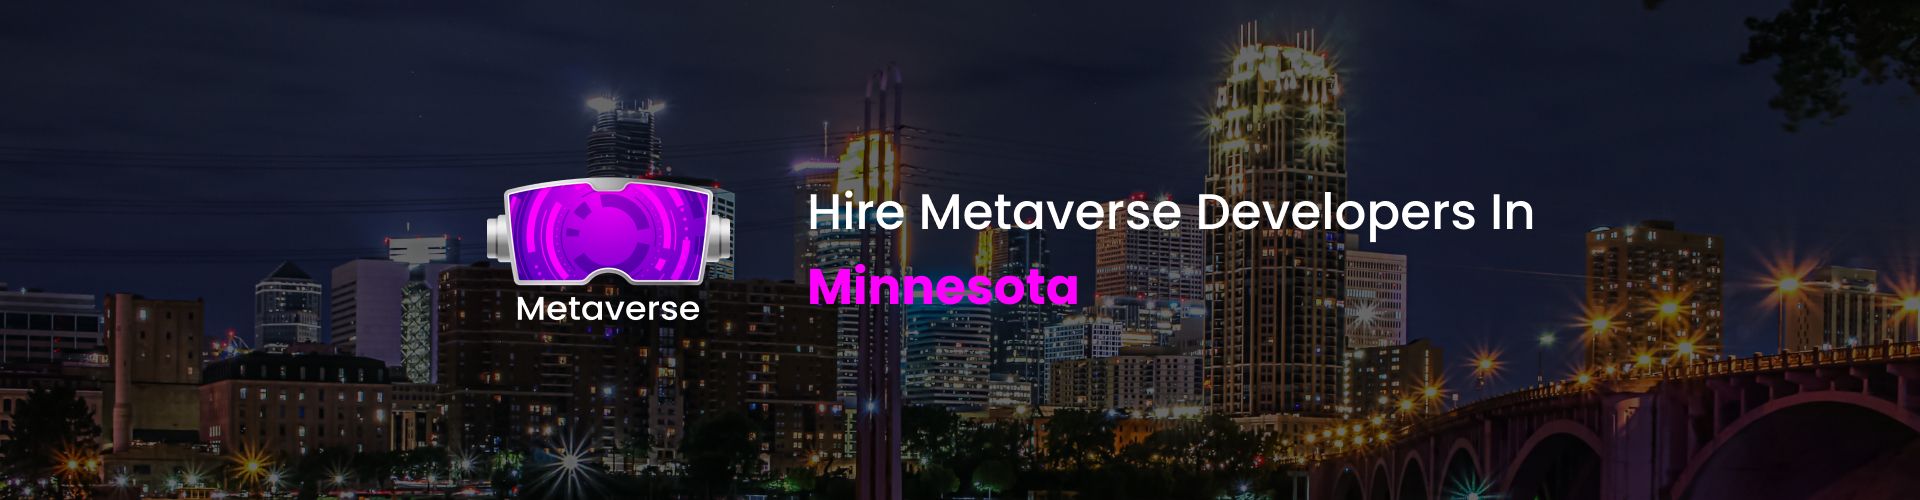 hire metaverse developers in minnesota